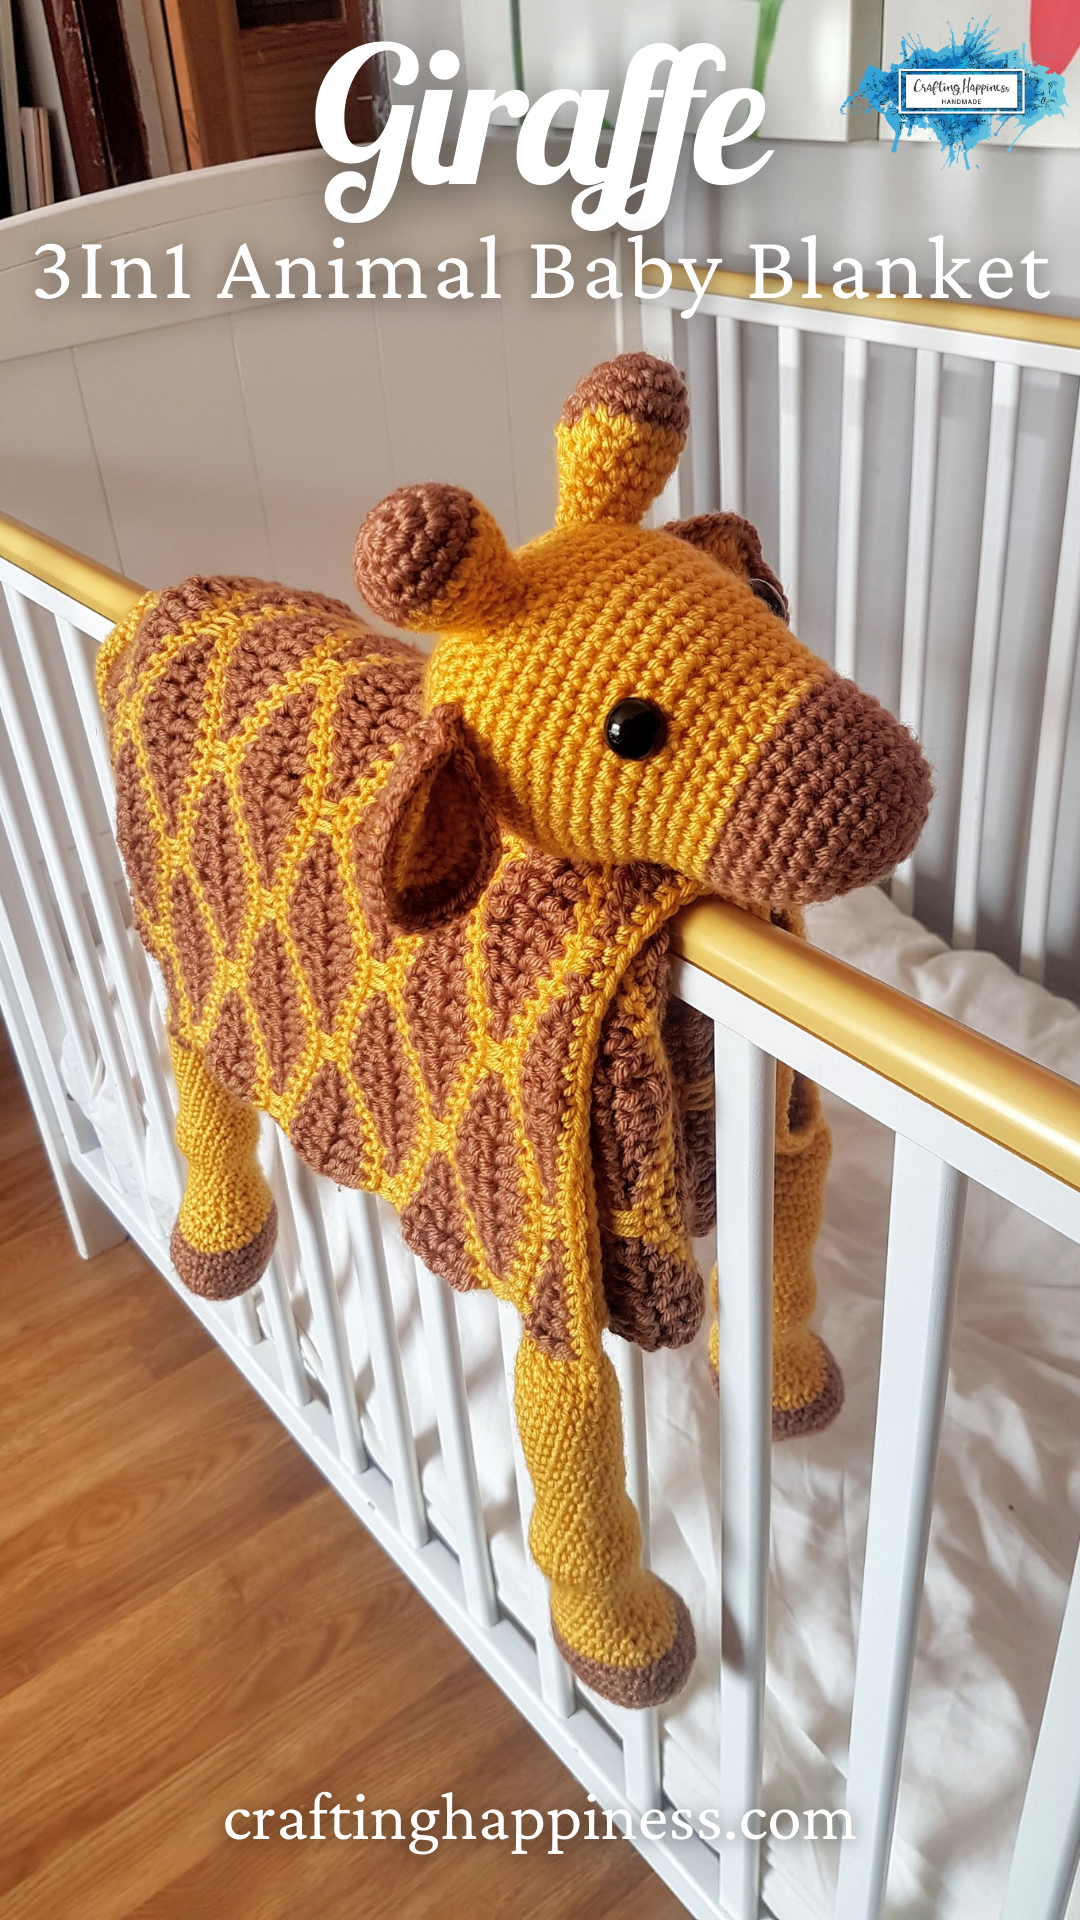 Giraffe Animal Baby Blanket | Crafting Happiness -   19 diy Baby crafts ideas